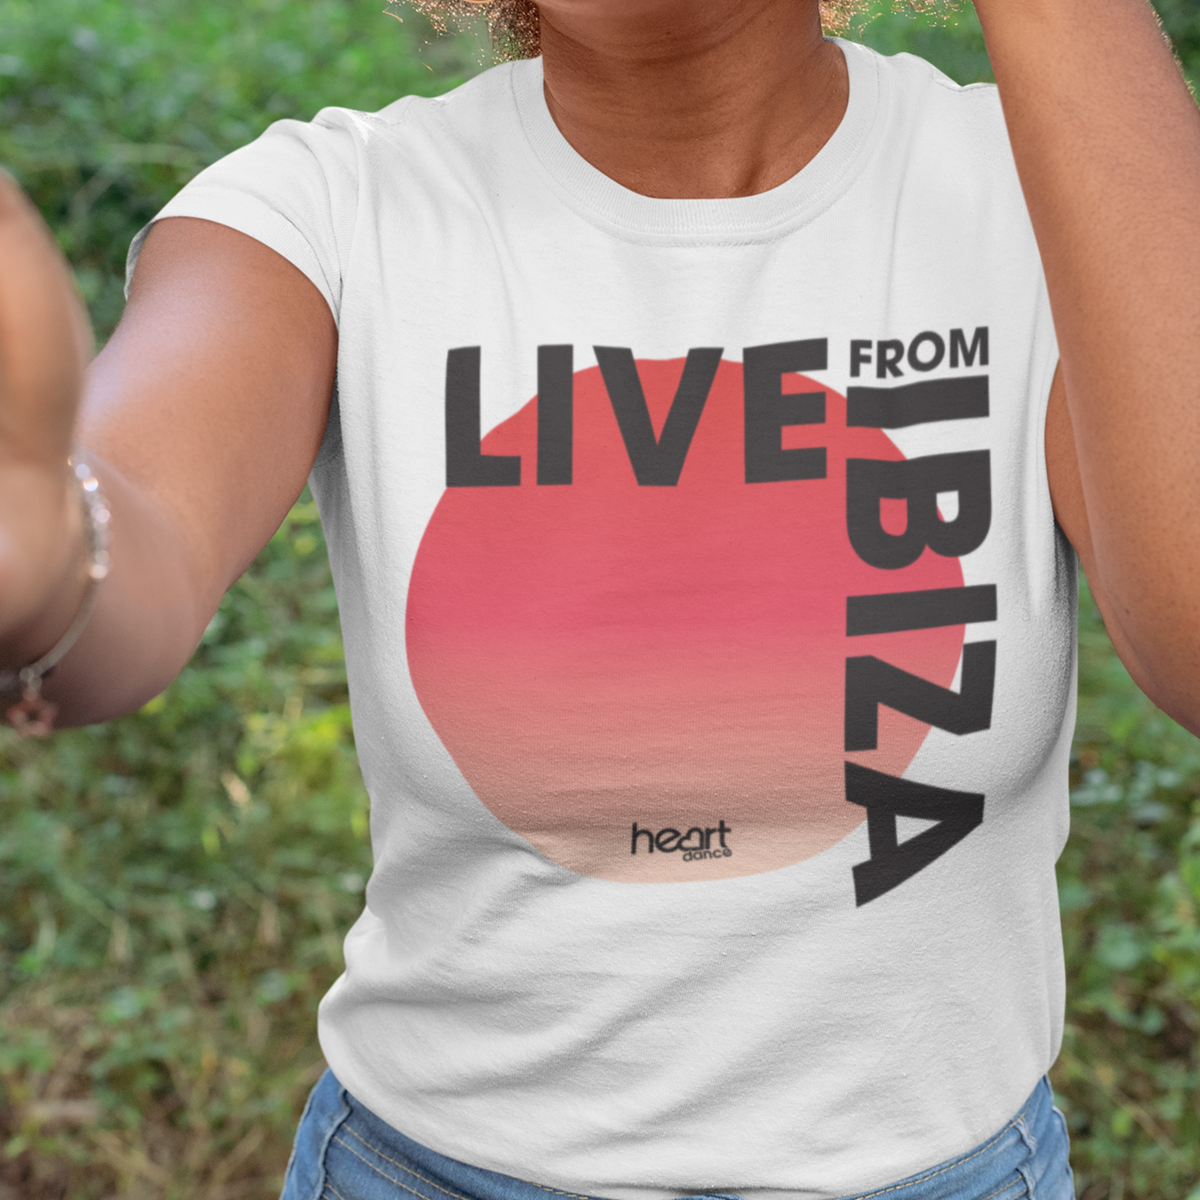 Heart Dance - Live From Ibiza T-Shirt